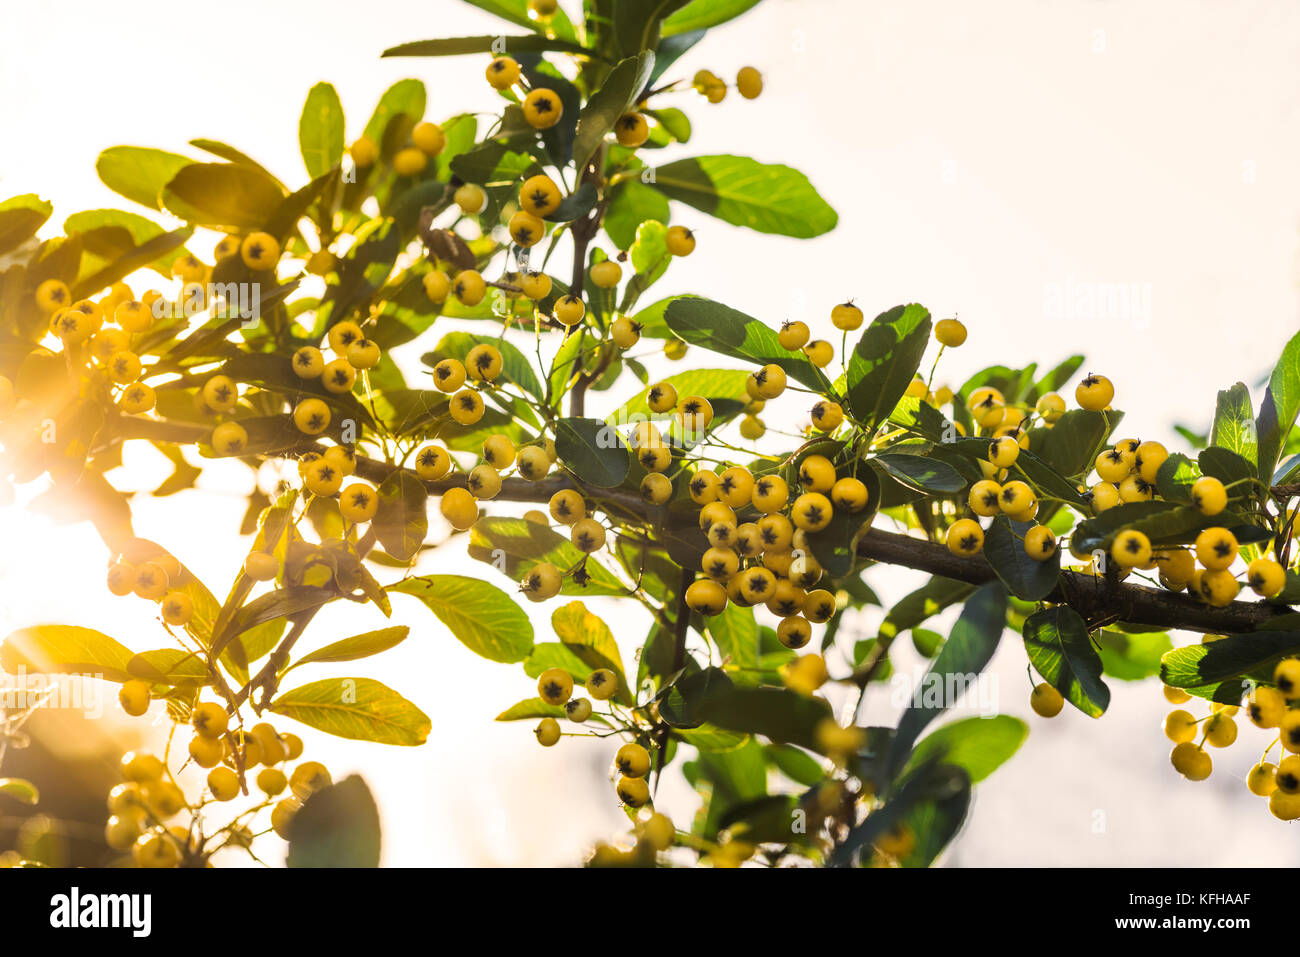 Pyracantha yellow autumn berries. Stock Photo